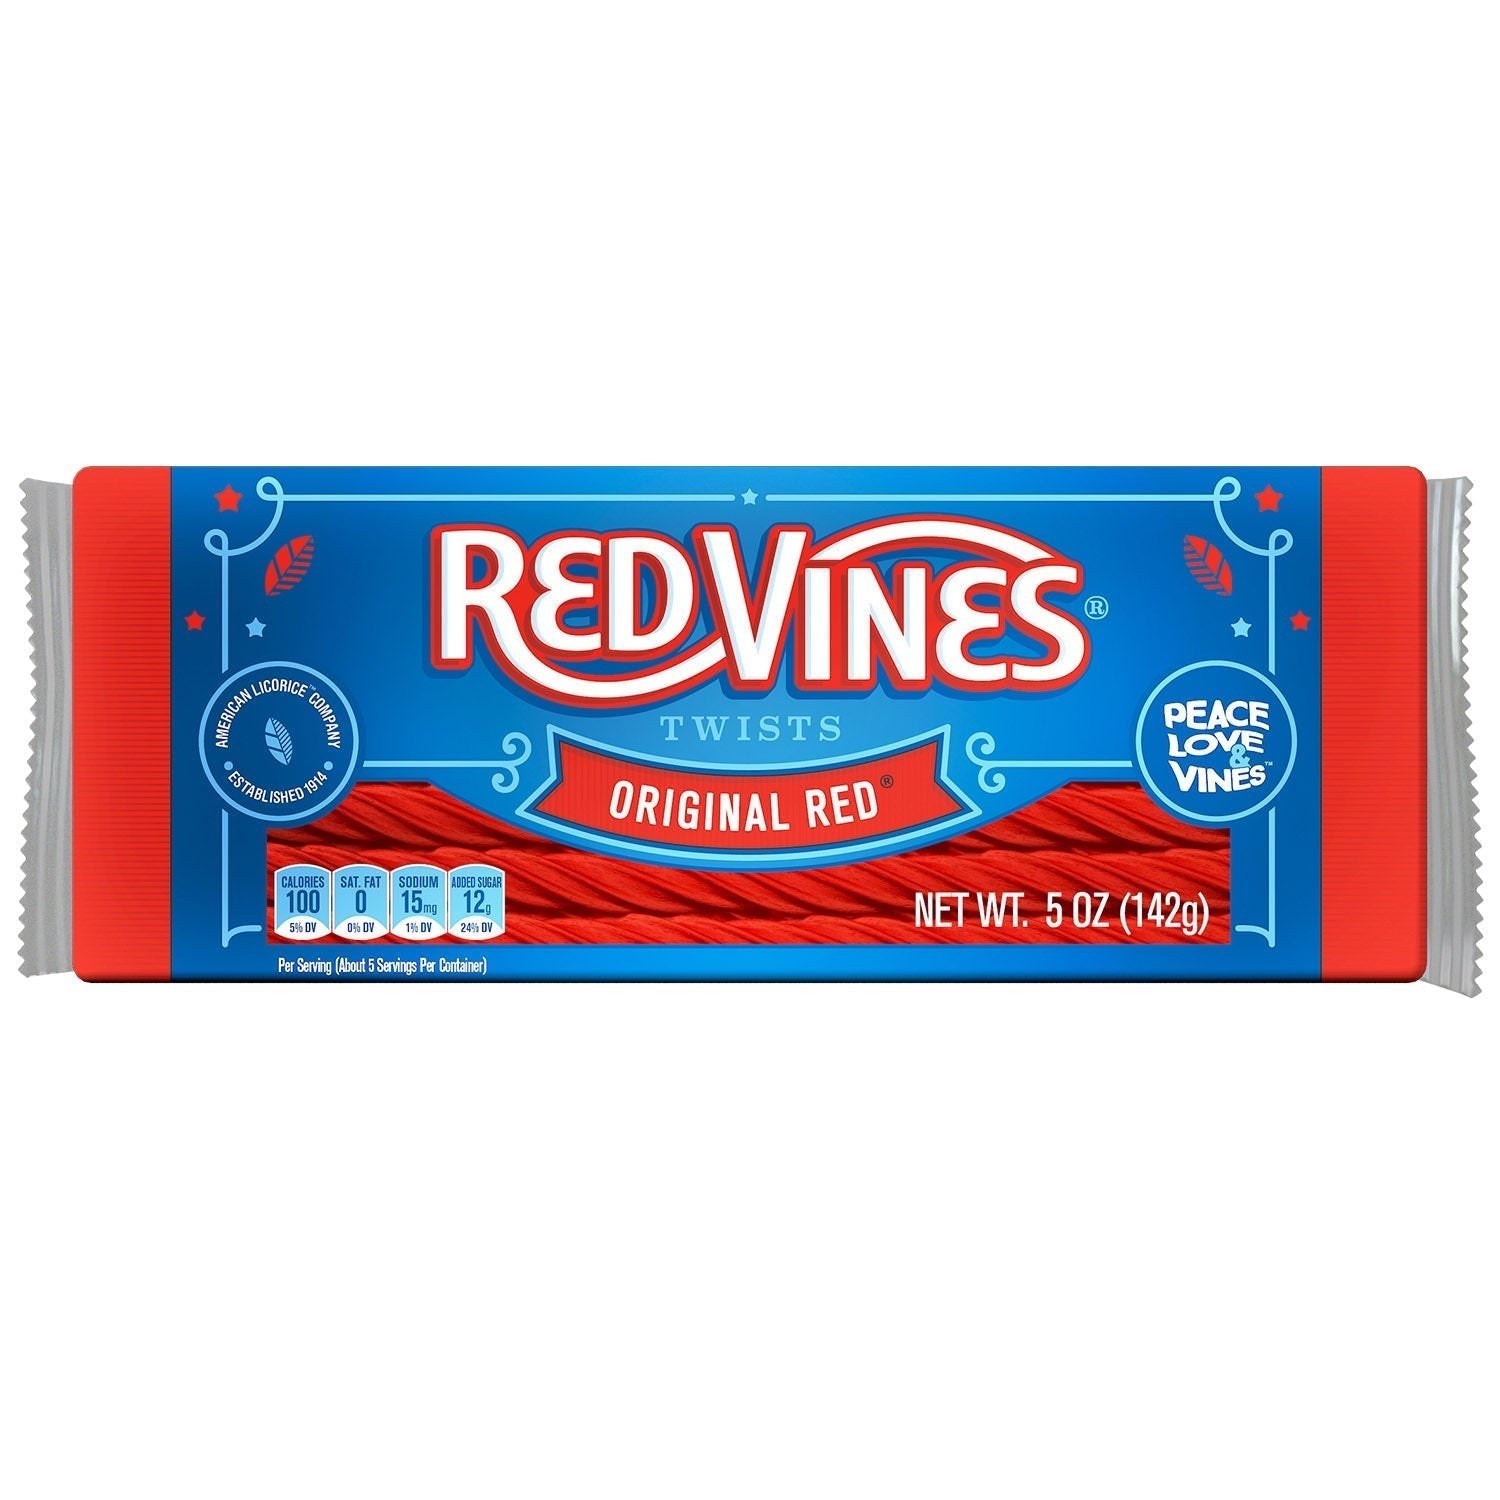 Red Vines Original Red® Chewy Licorice Twists 5oz Trays